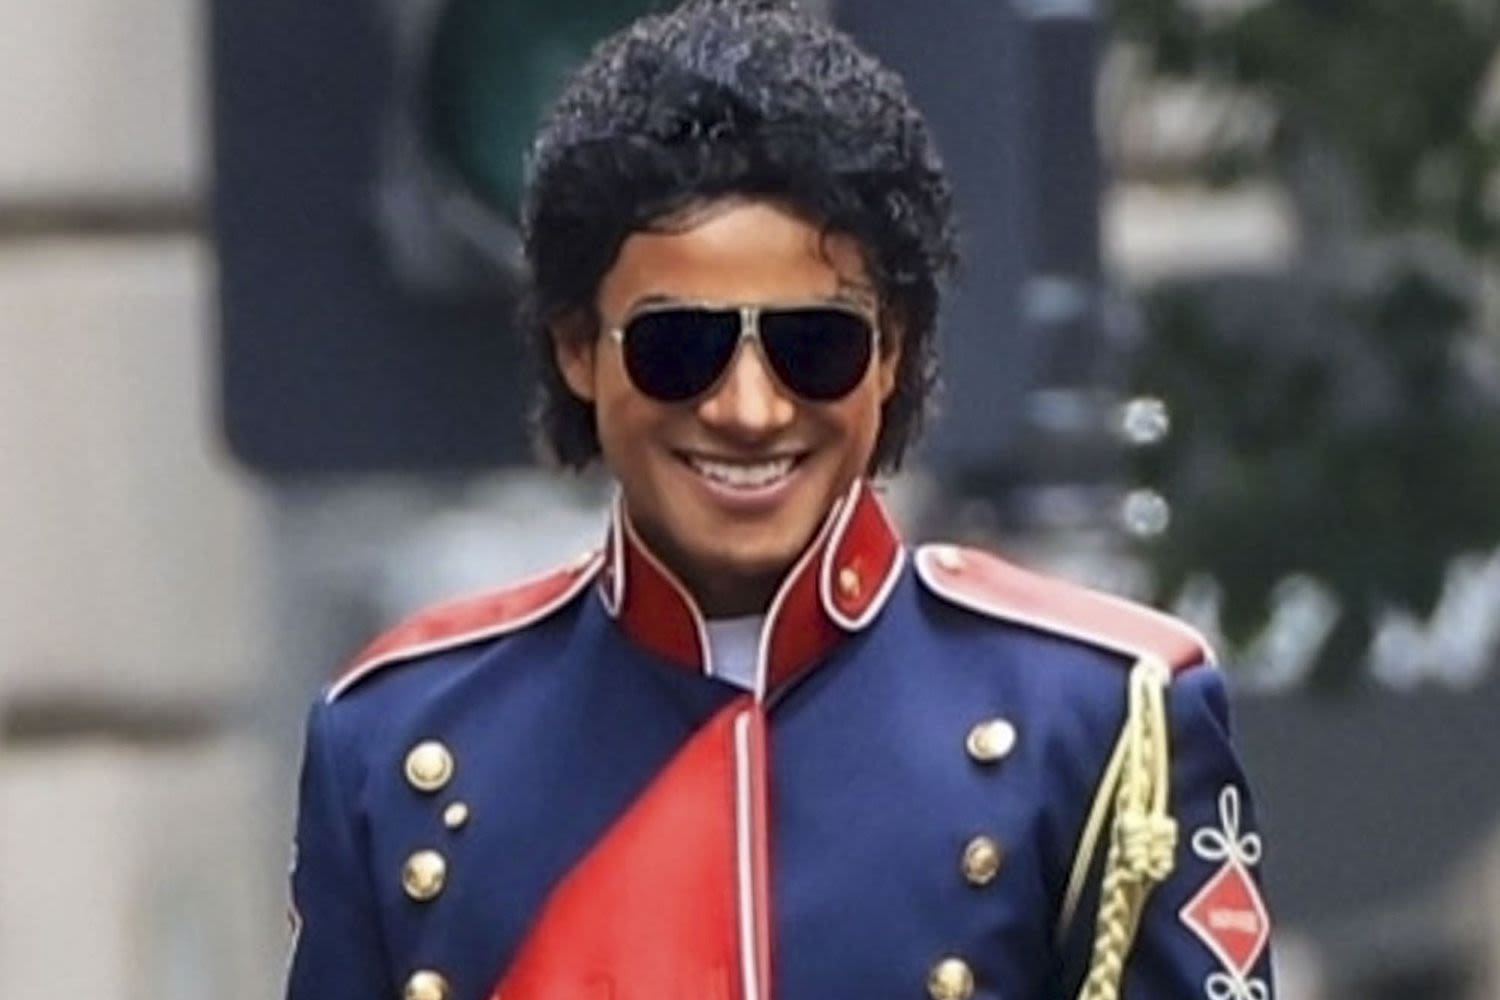 Jaafar Jackson Poses as His Uncle Michael Jackson on Set of Upcoming Biopic “Michael”